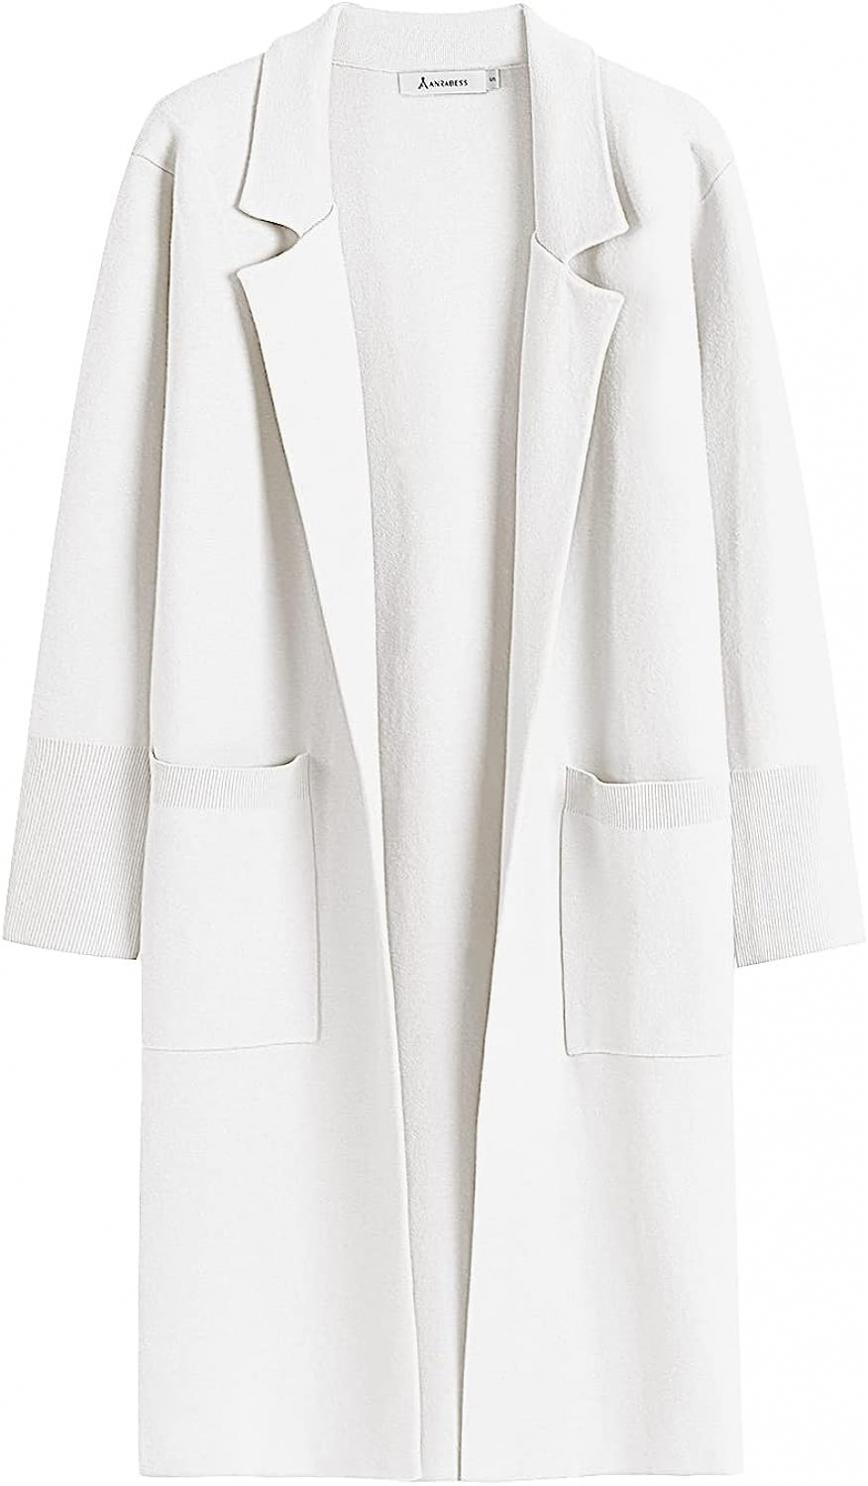 ANRABESS Cardigan for Women Oversized Open Front Sweater Coat Long Sleeve Lapel Blazer Jacket Fall Outwear Coatigan